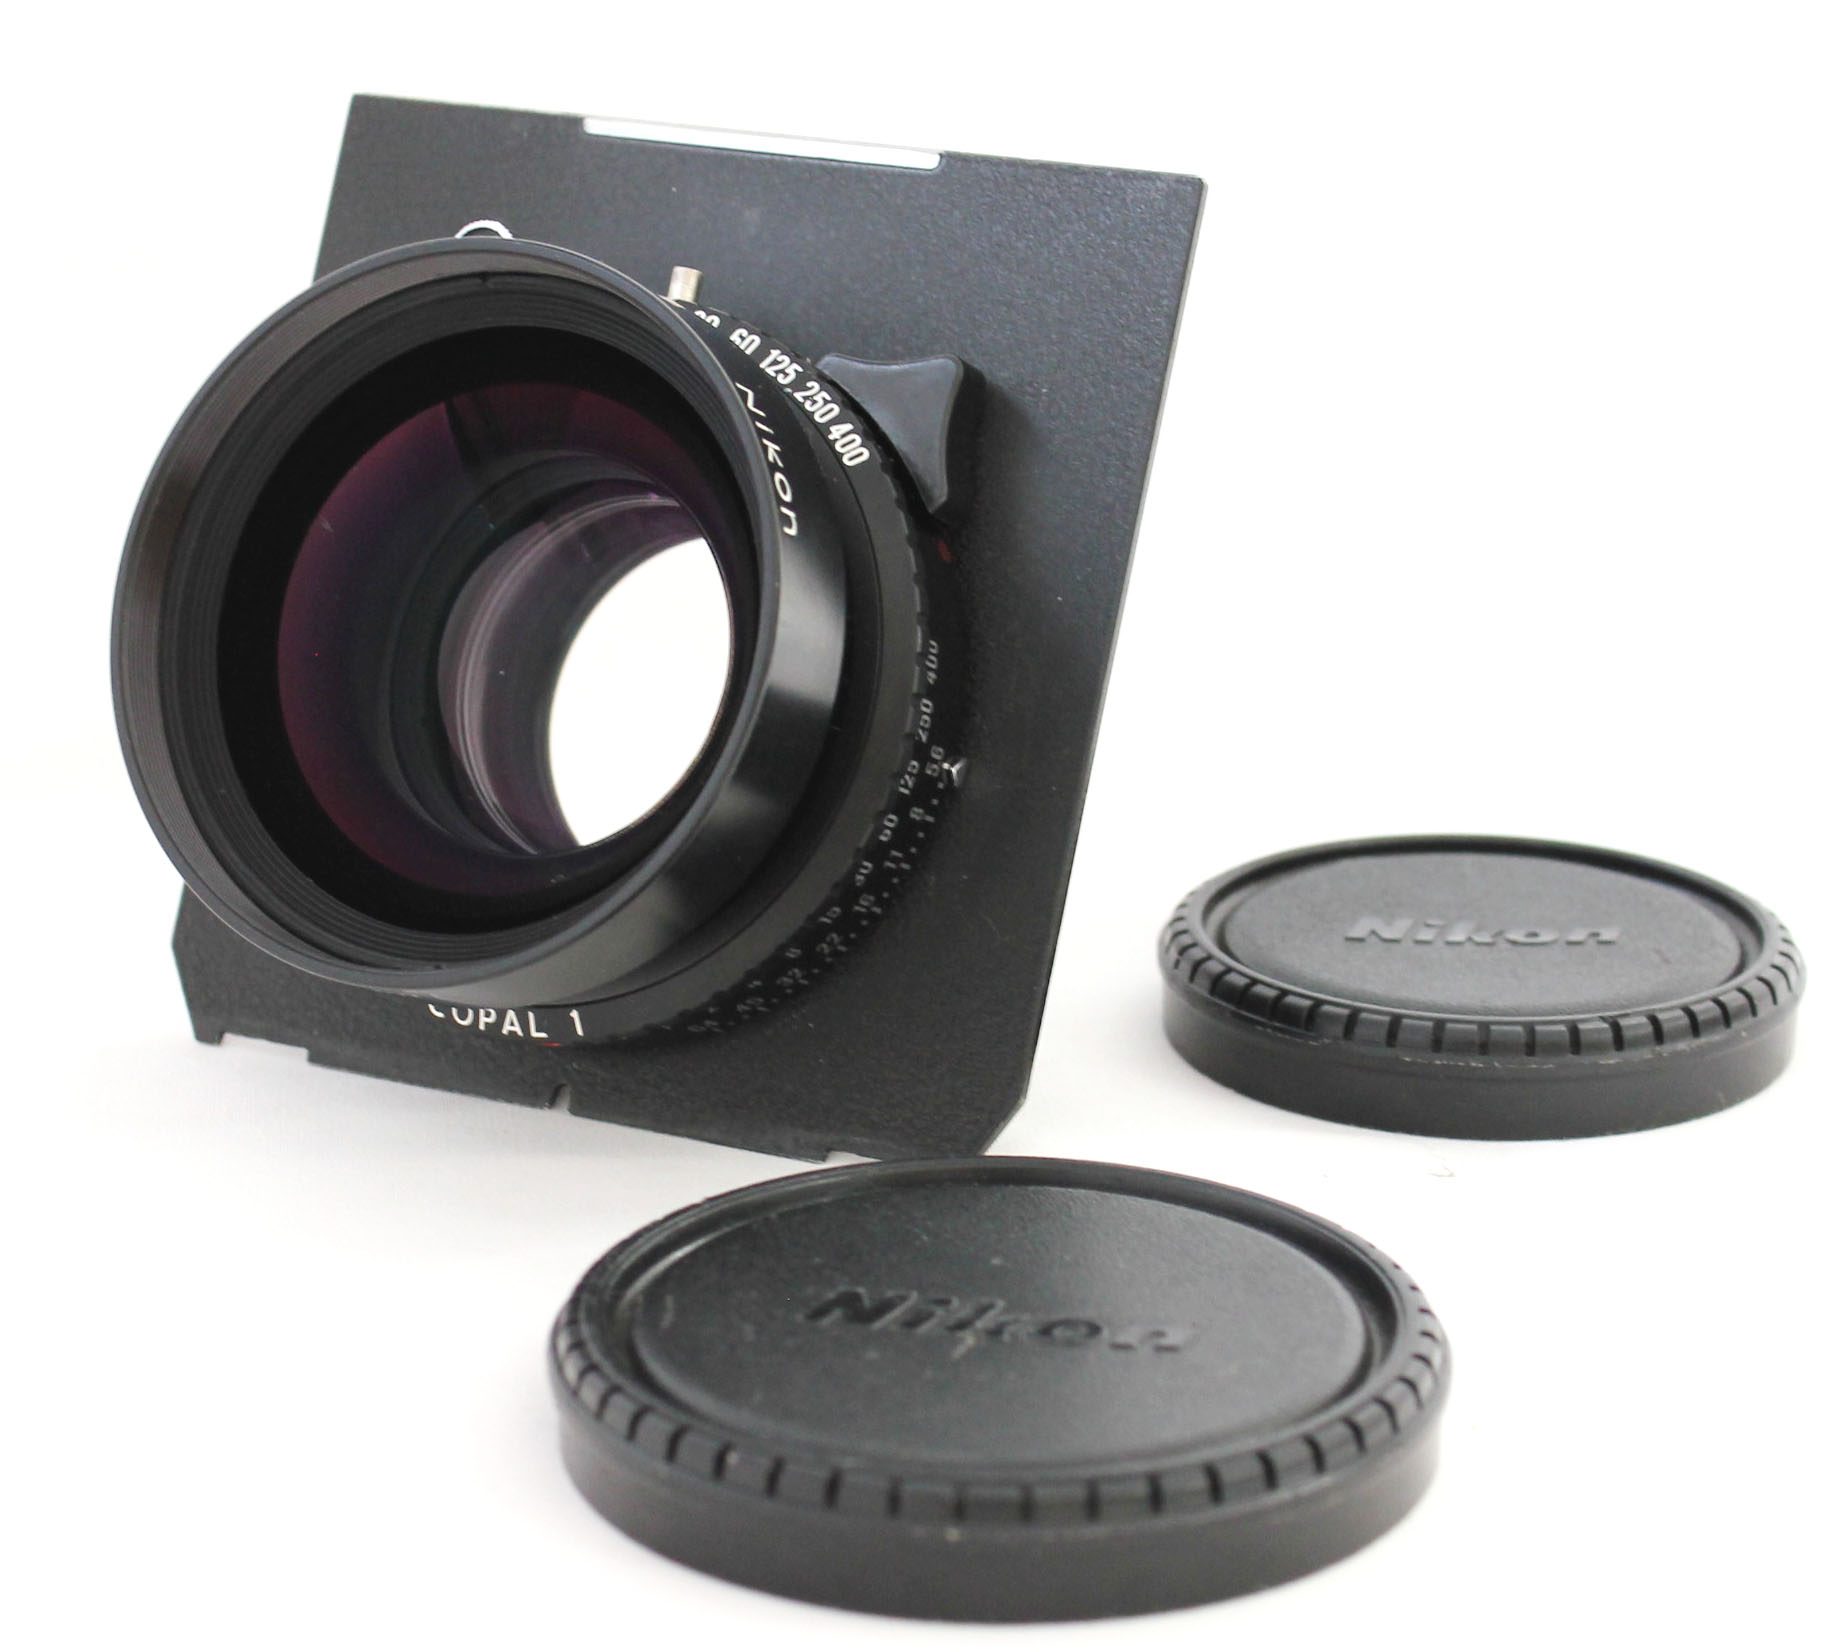 Nikon Nikkor W 210mm F/5.6 4x5 Large Format Lens with Copal 1 Shutter Linhof Board from Japan Photo 0